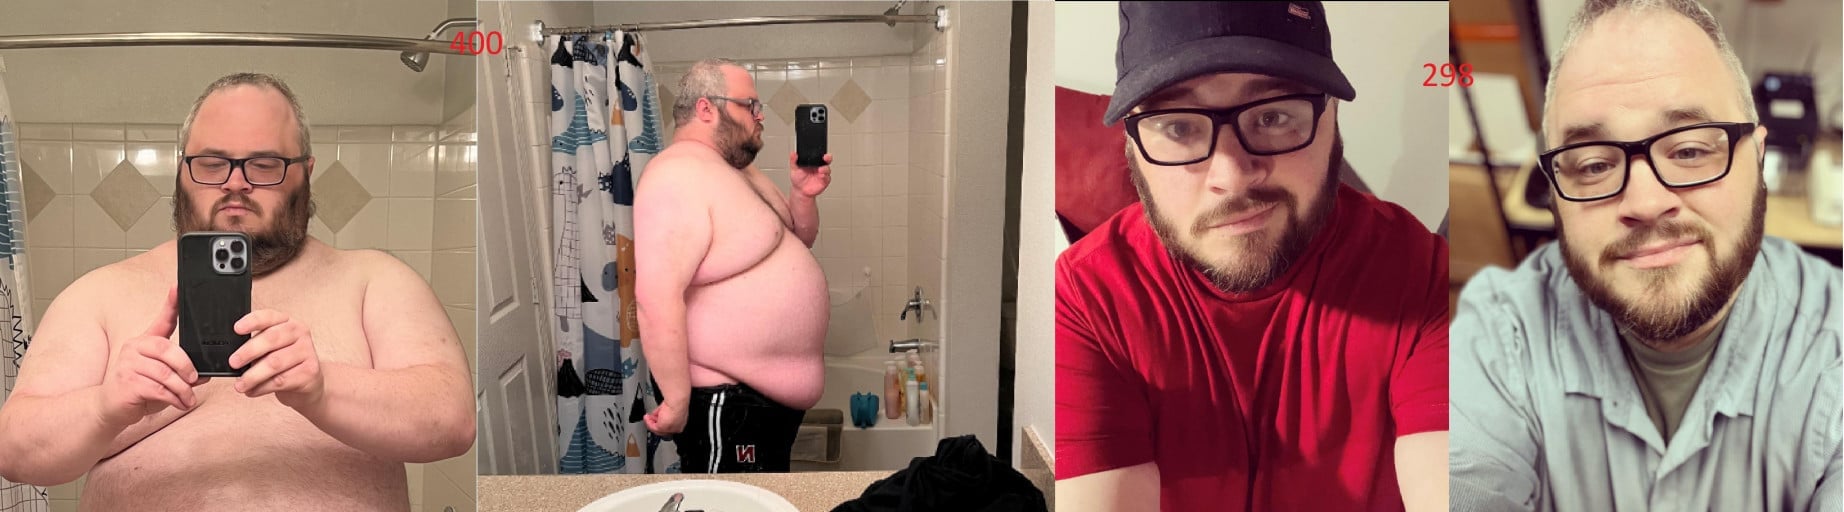 Progress Pics of 102 lbs Weight Loss 5 feet 11 Male 400 lbs to 298 lbs